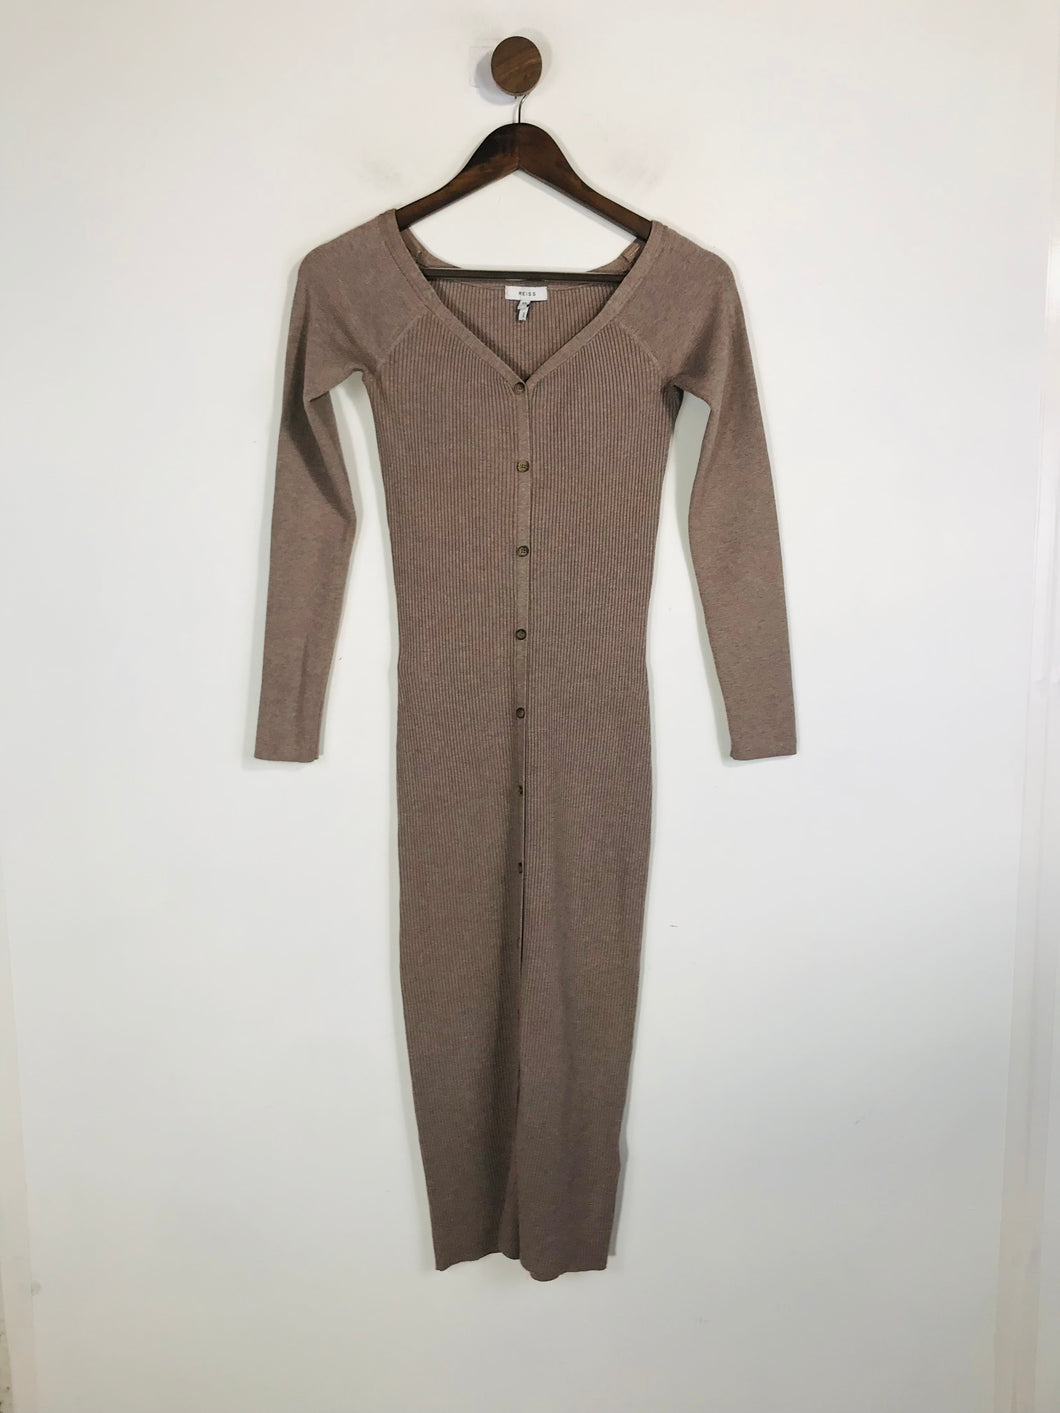 Reiss Women's Knit Ribbed Bodycon Dress | XS UK6-8 | Brown